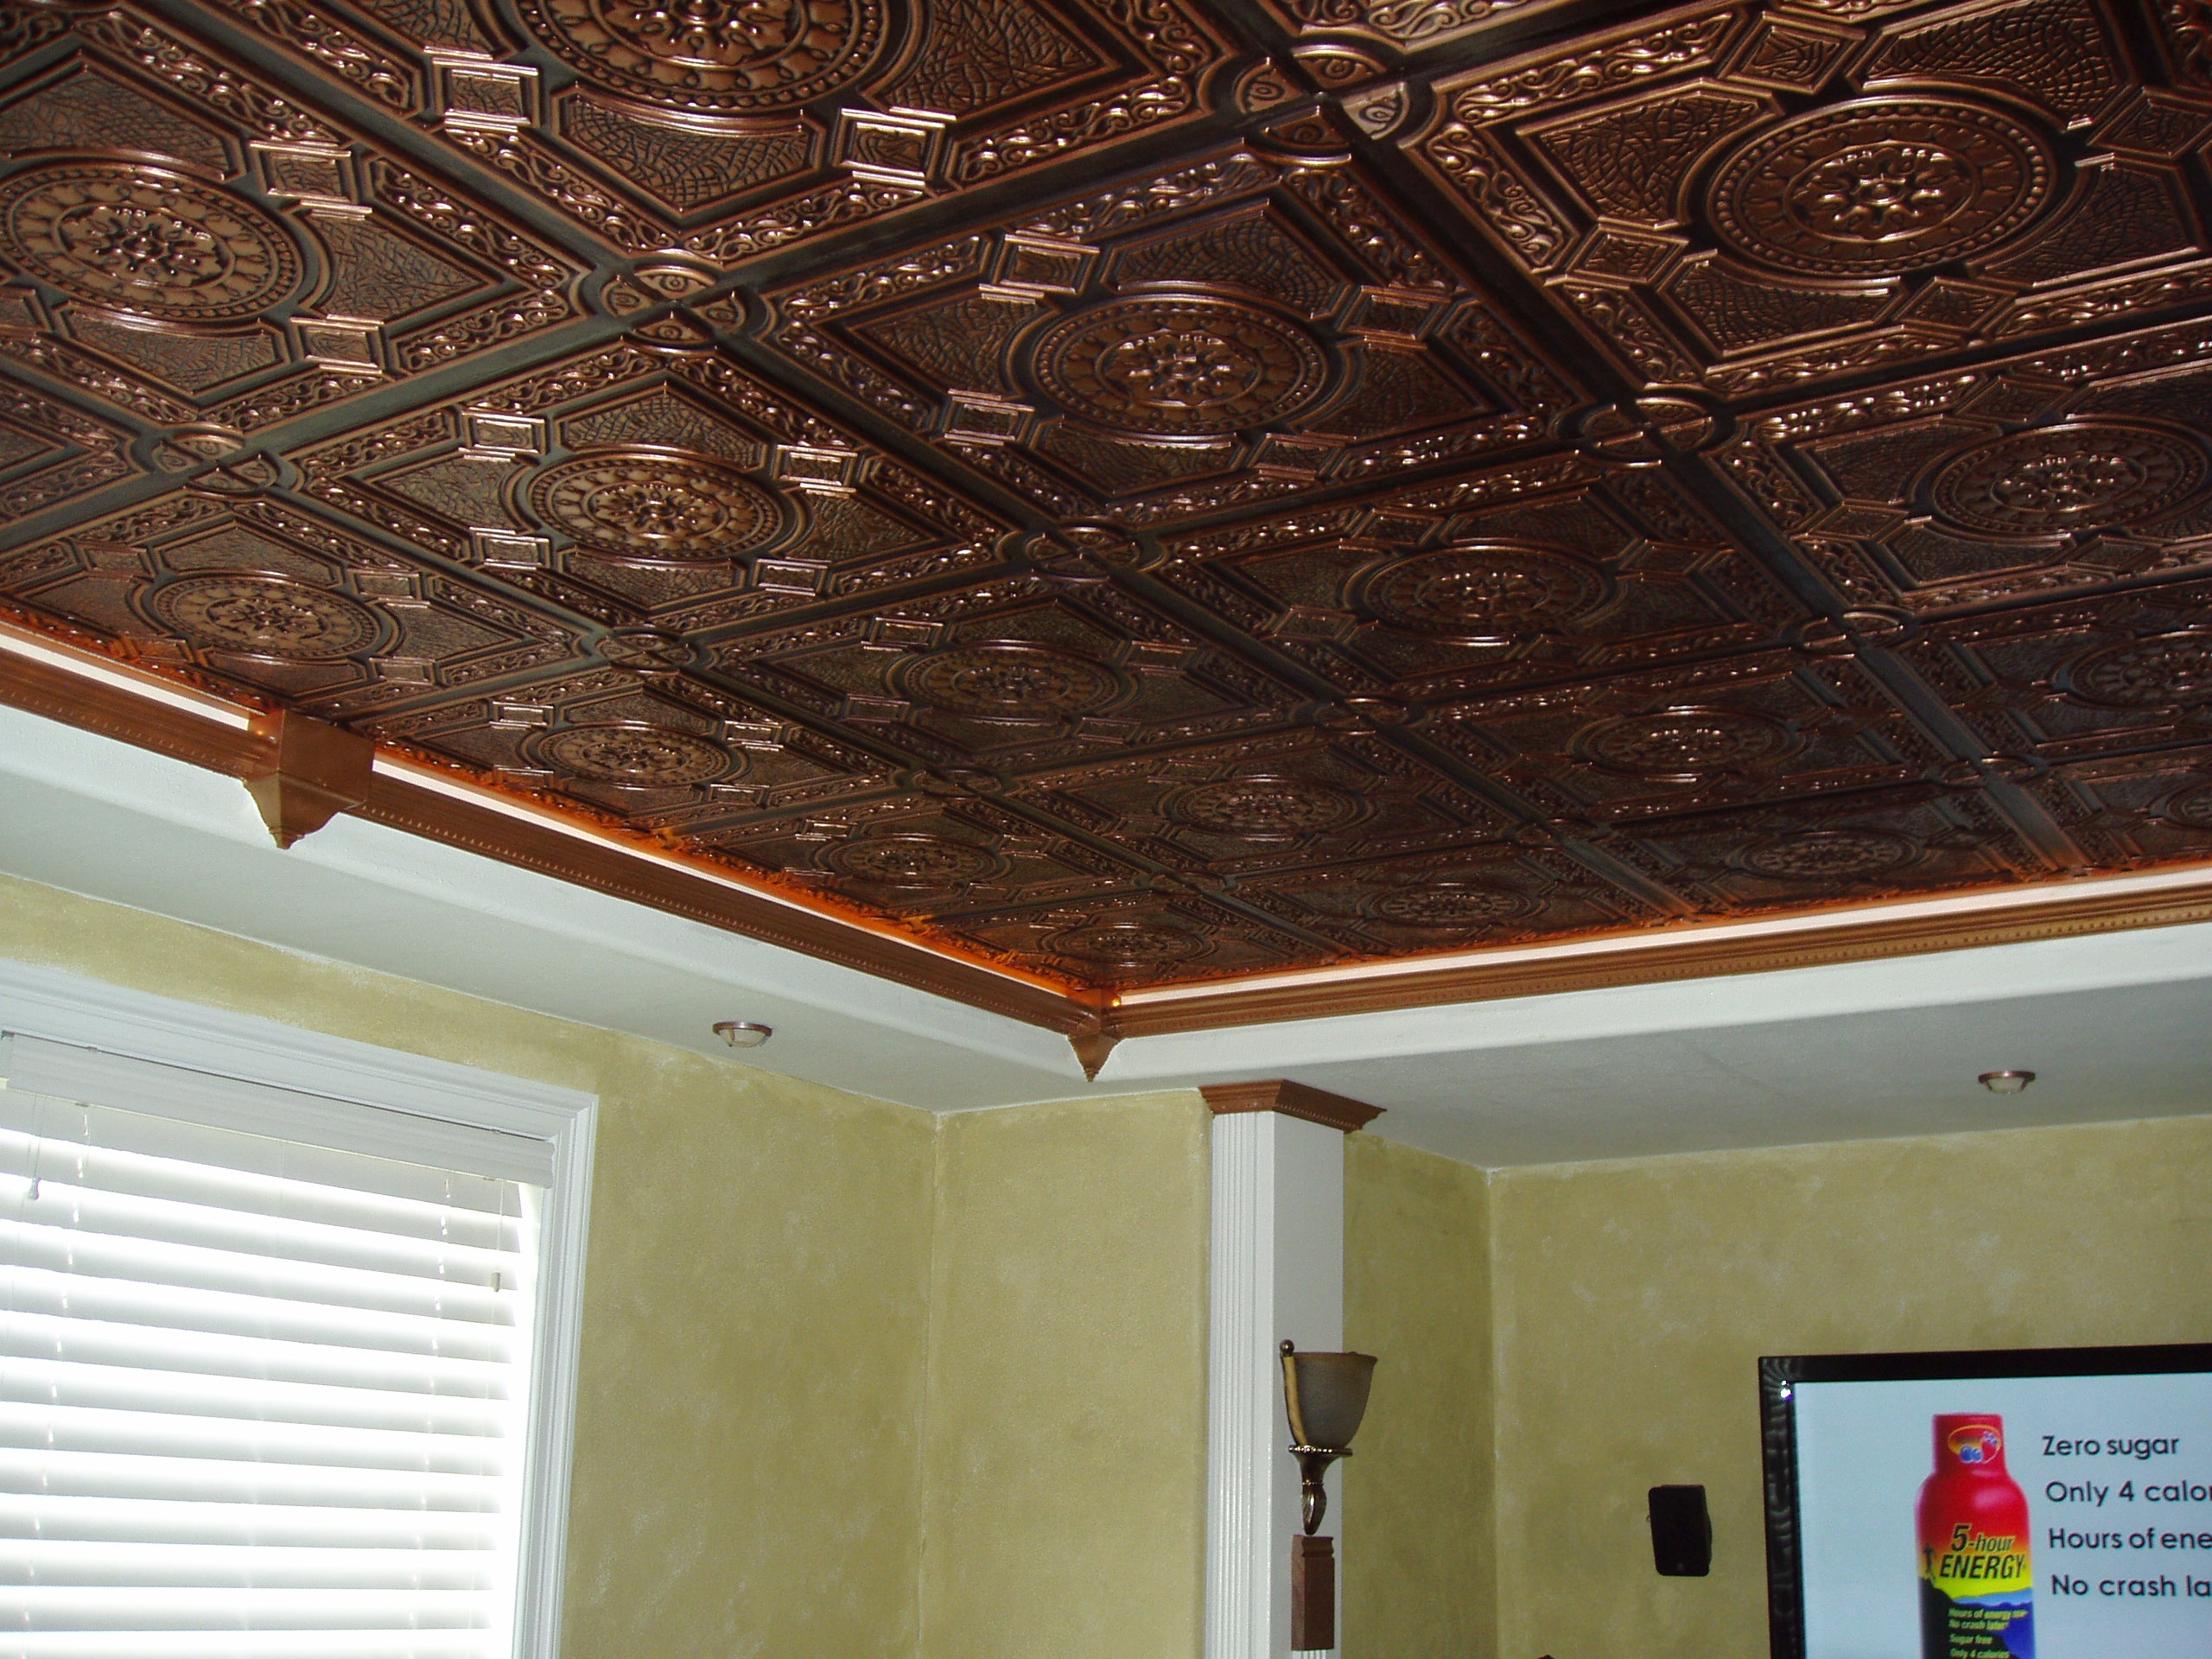 Copper Tiles For Ceiling Copper Tiles For Ceiling drop down ceiling tiles copper ceiling tiles for spacious look 2560 X 1920